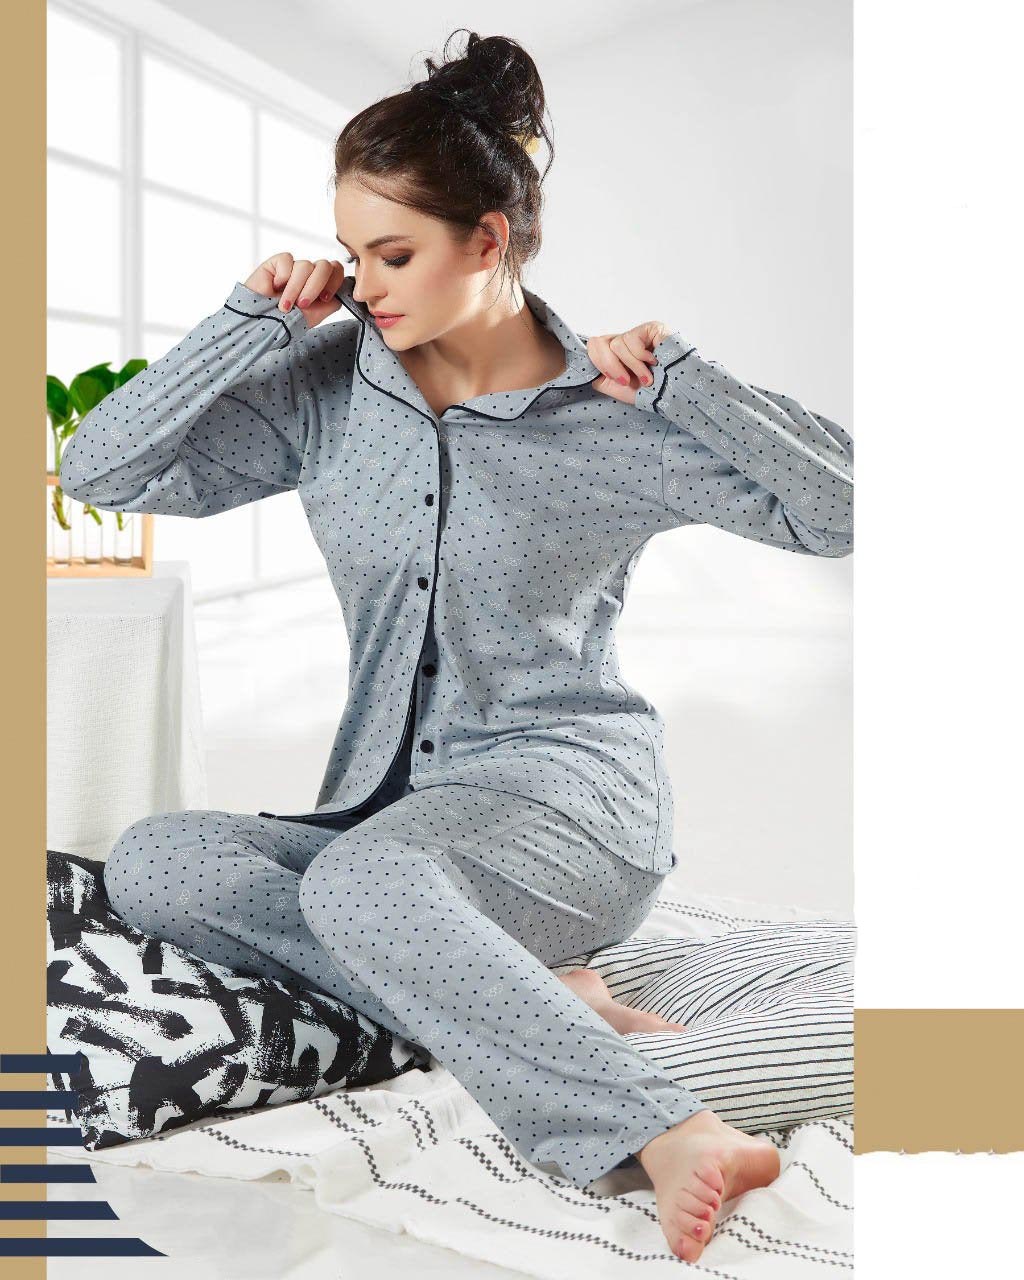 Women's Cotton Printed Pyjama/Women's Lounge Pants/Night